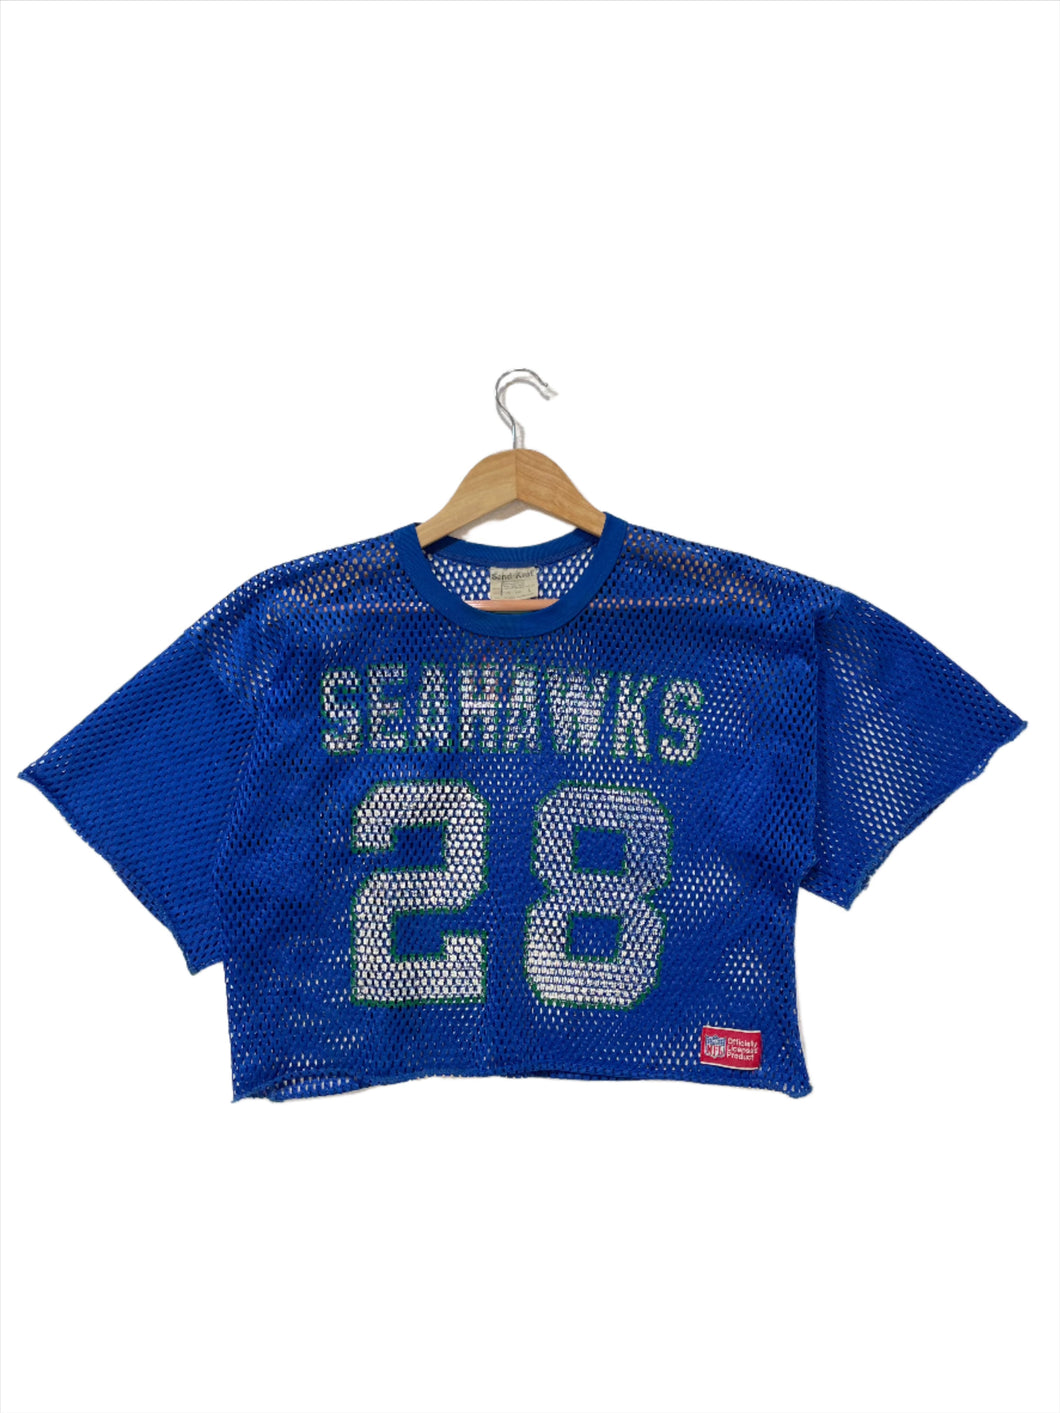 RS Vintage Seattle Seahawks #28 Mesh Crop Jersey Sz. L